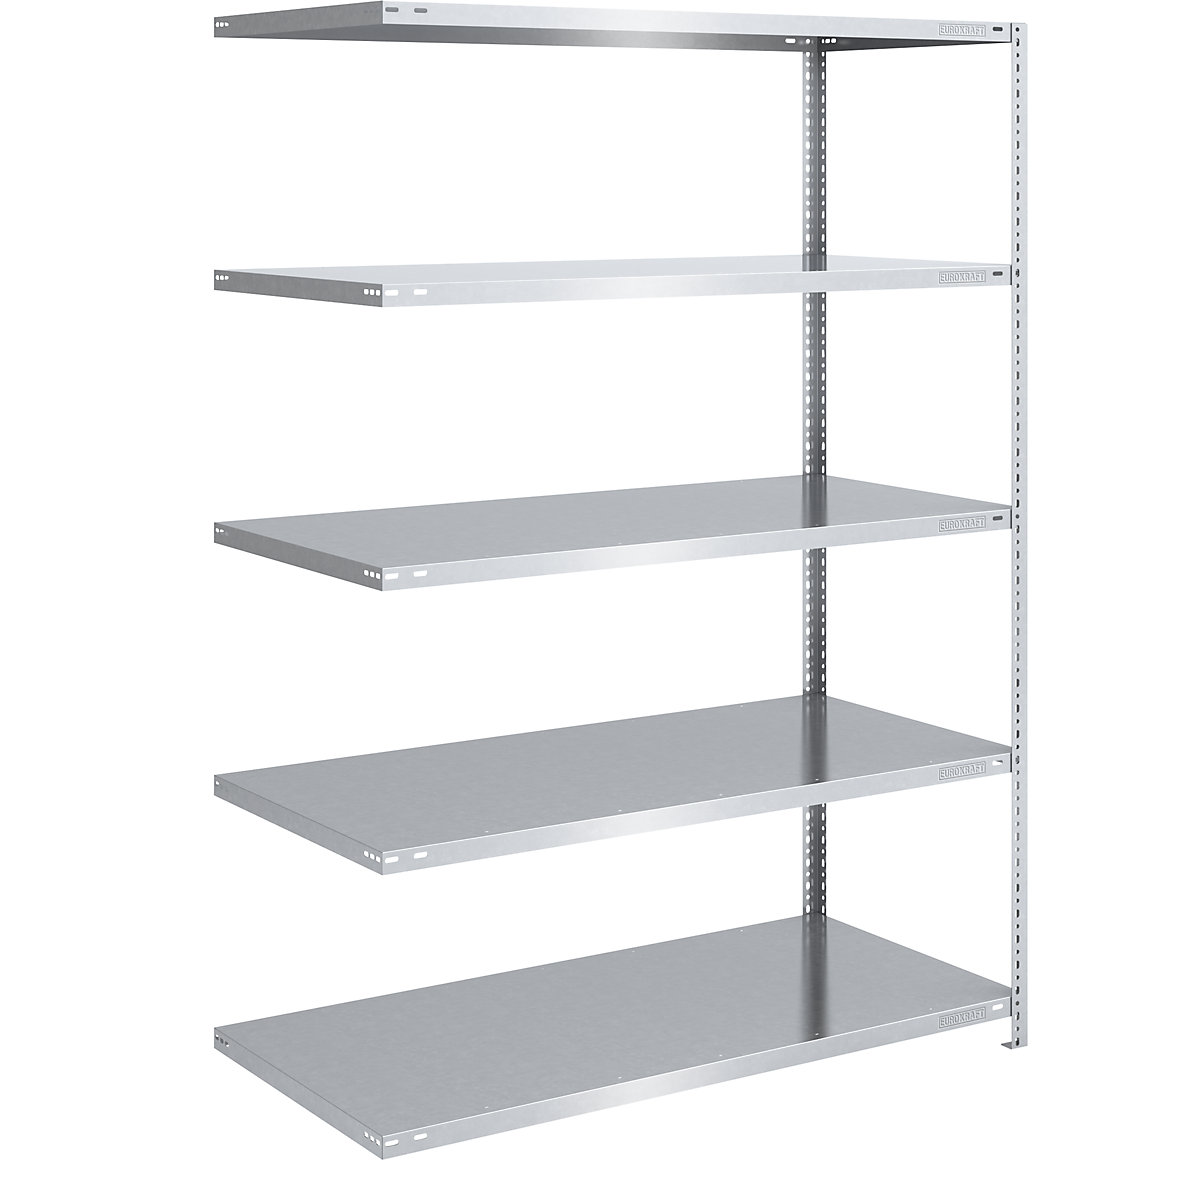 Bolt-together shelf unit, light duty, zinc plated – eurokraft pro, shelf unit height 2000 mm, shelf width 1300 mm, depth 800 mm, extension shelf unit-9